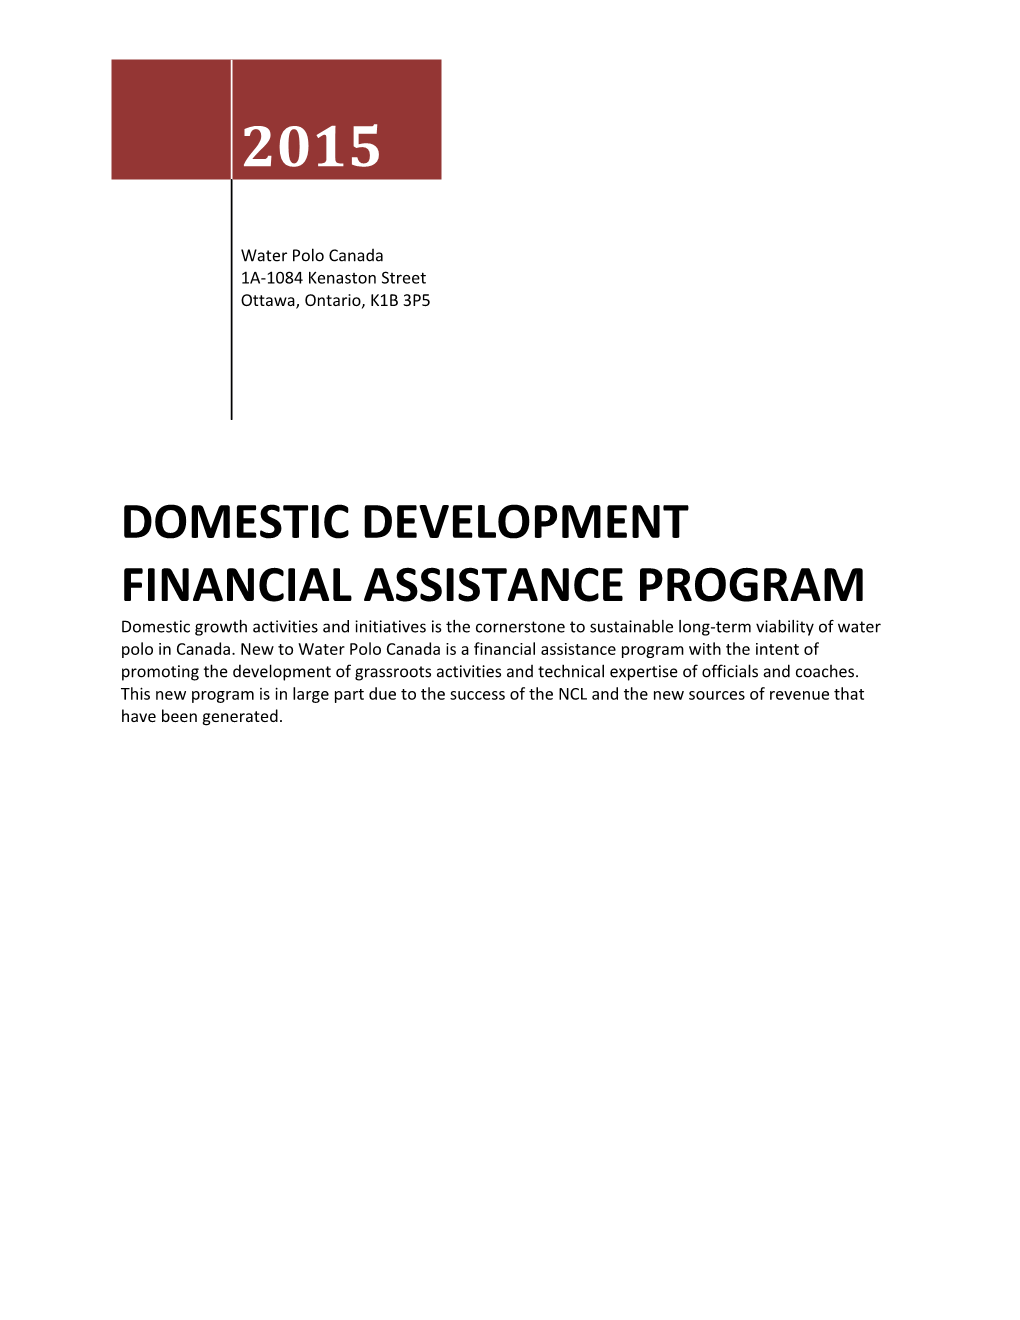 Domestic Development Financial Assistance Program